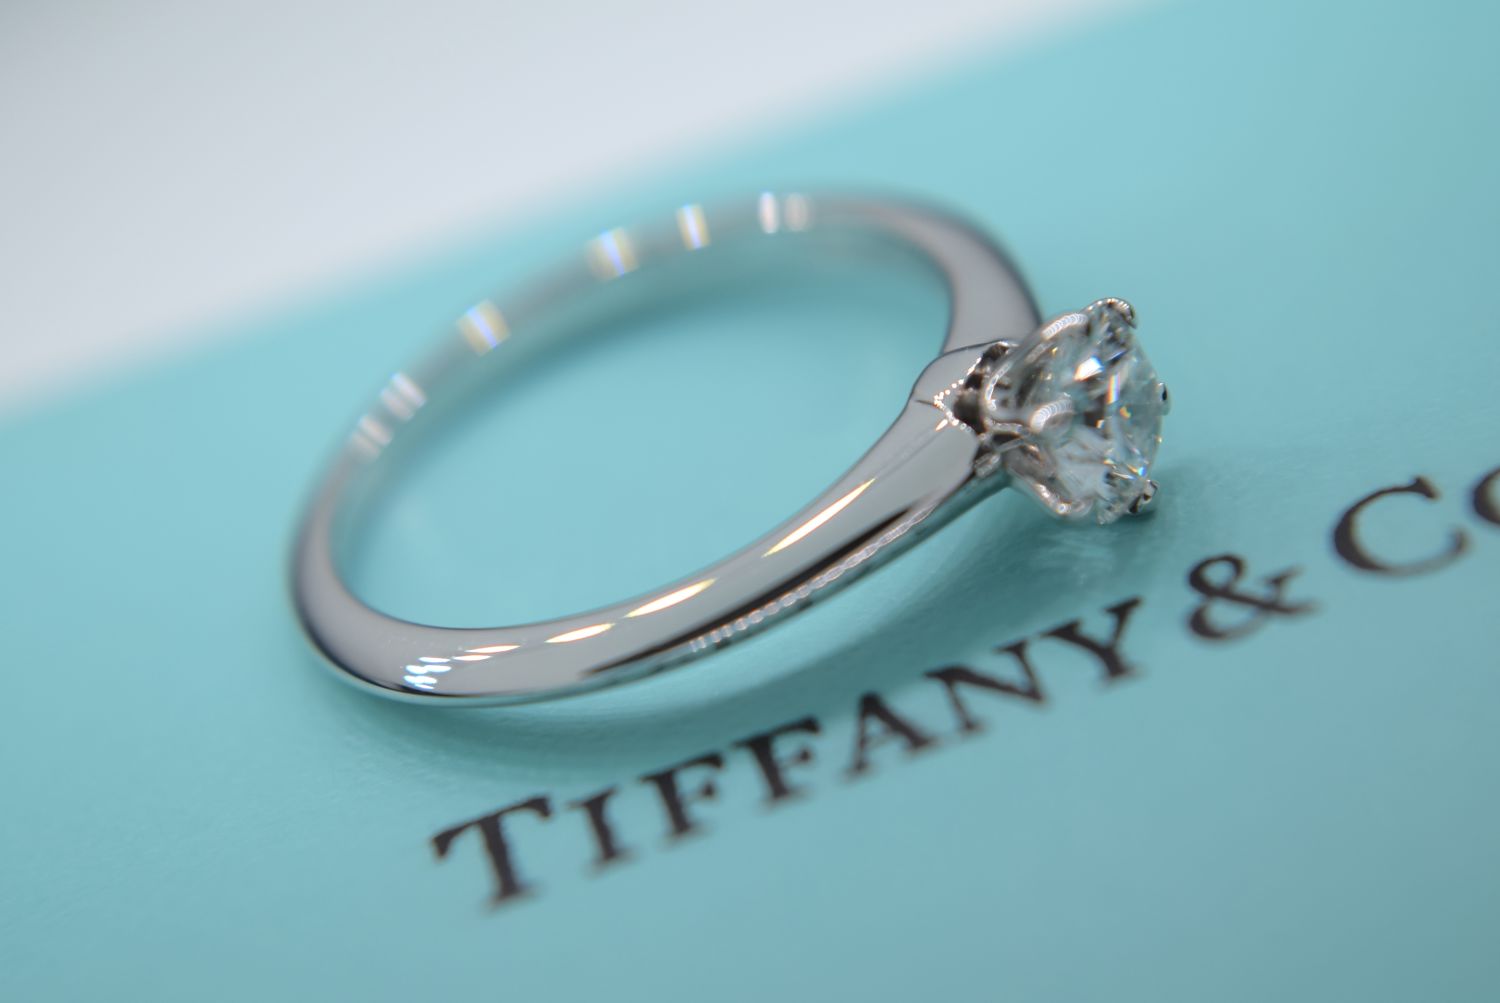 *HARRODS* TIFFANY & CO PLATINUM VVS2 DIAMOND SOLITAIRE RING """"THE TIFFANY SETTING®"""" - BOX & CER - Image 7 of 17